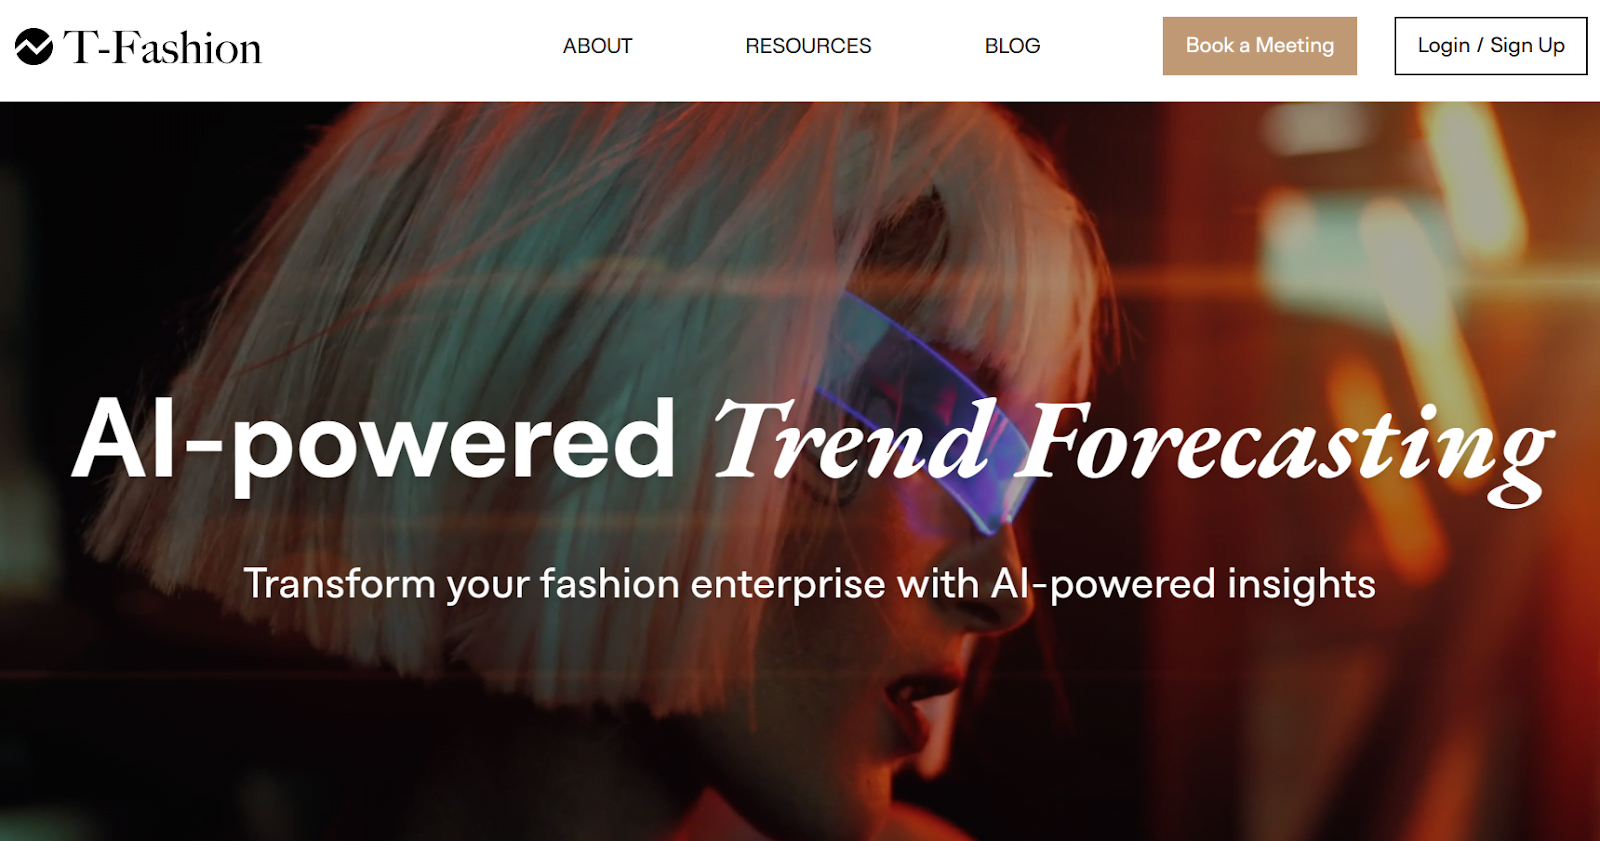 t-fashion - AI-powered trend forecasting